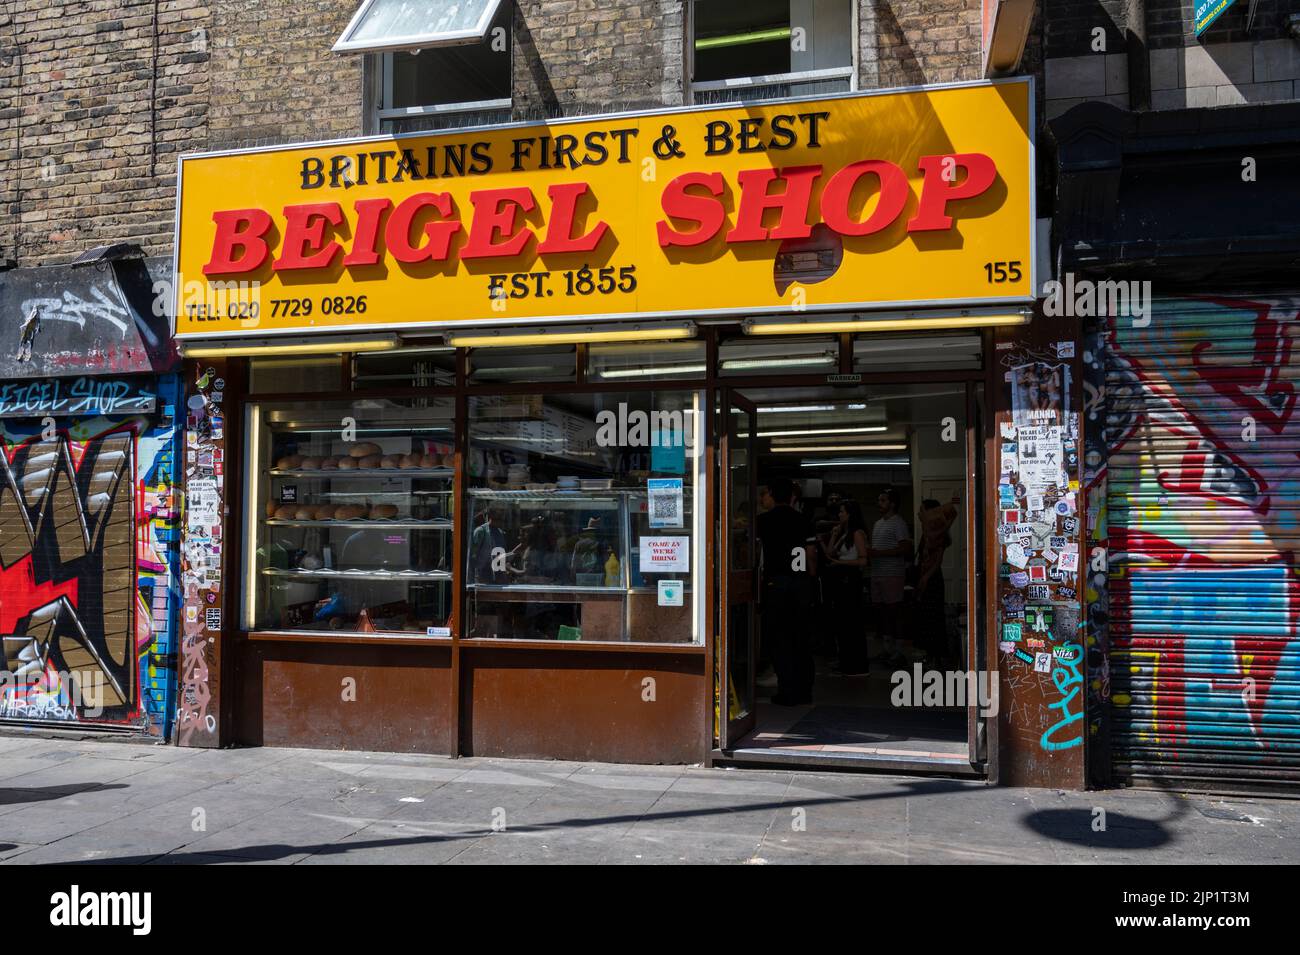 Britains first and best Beigel Shop Brick Lane London UK Stock Photo